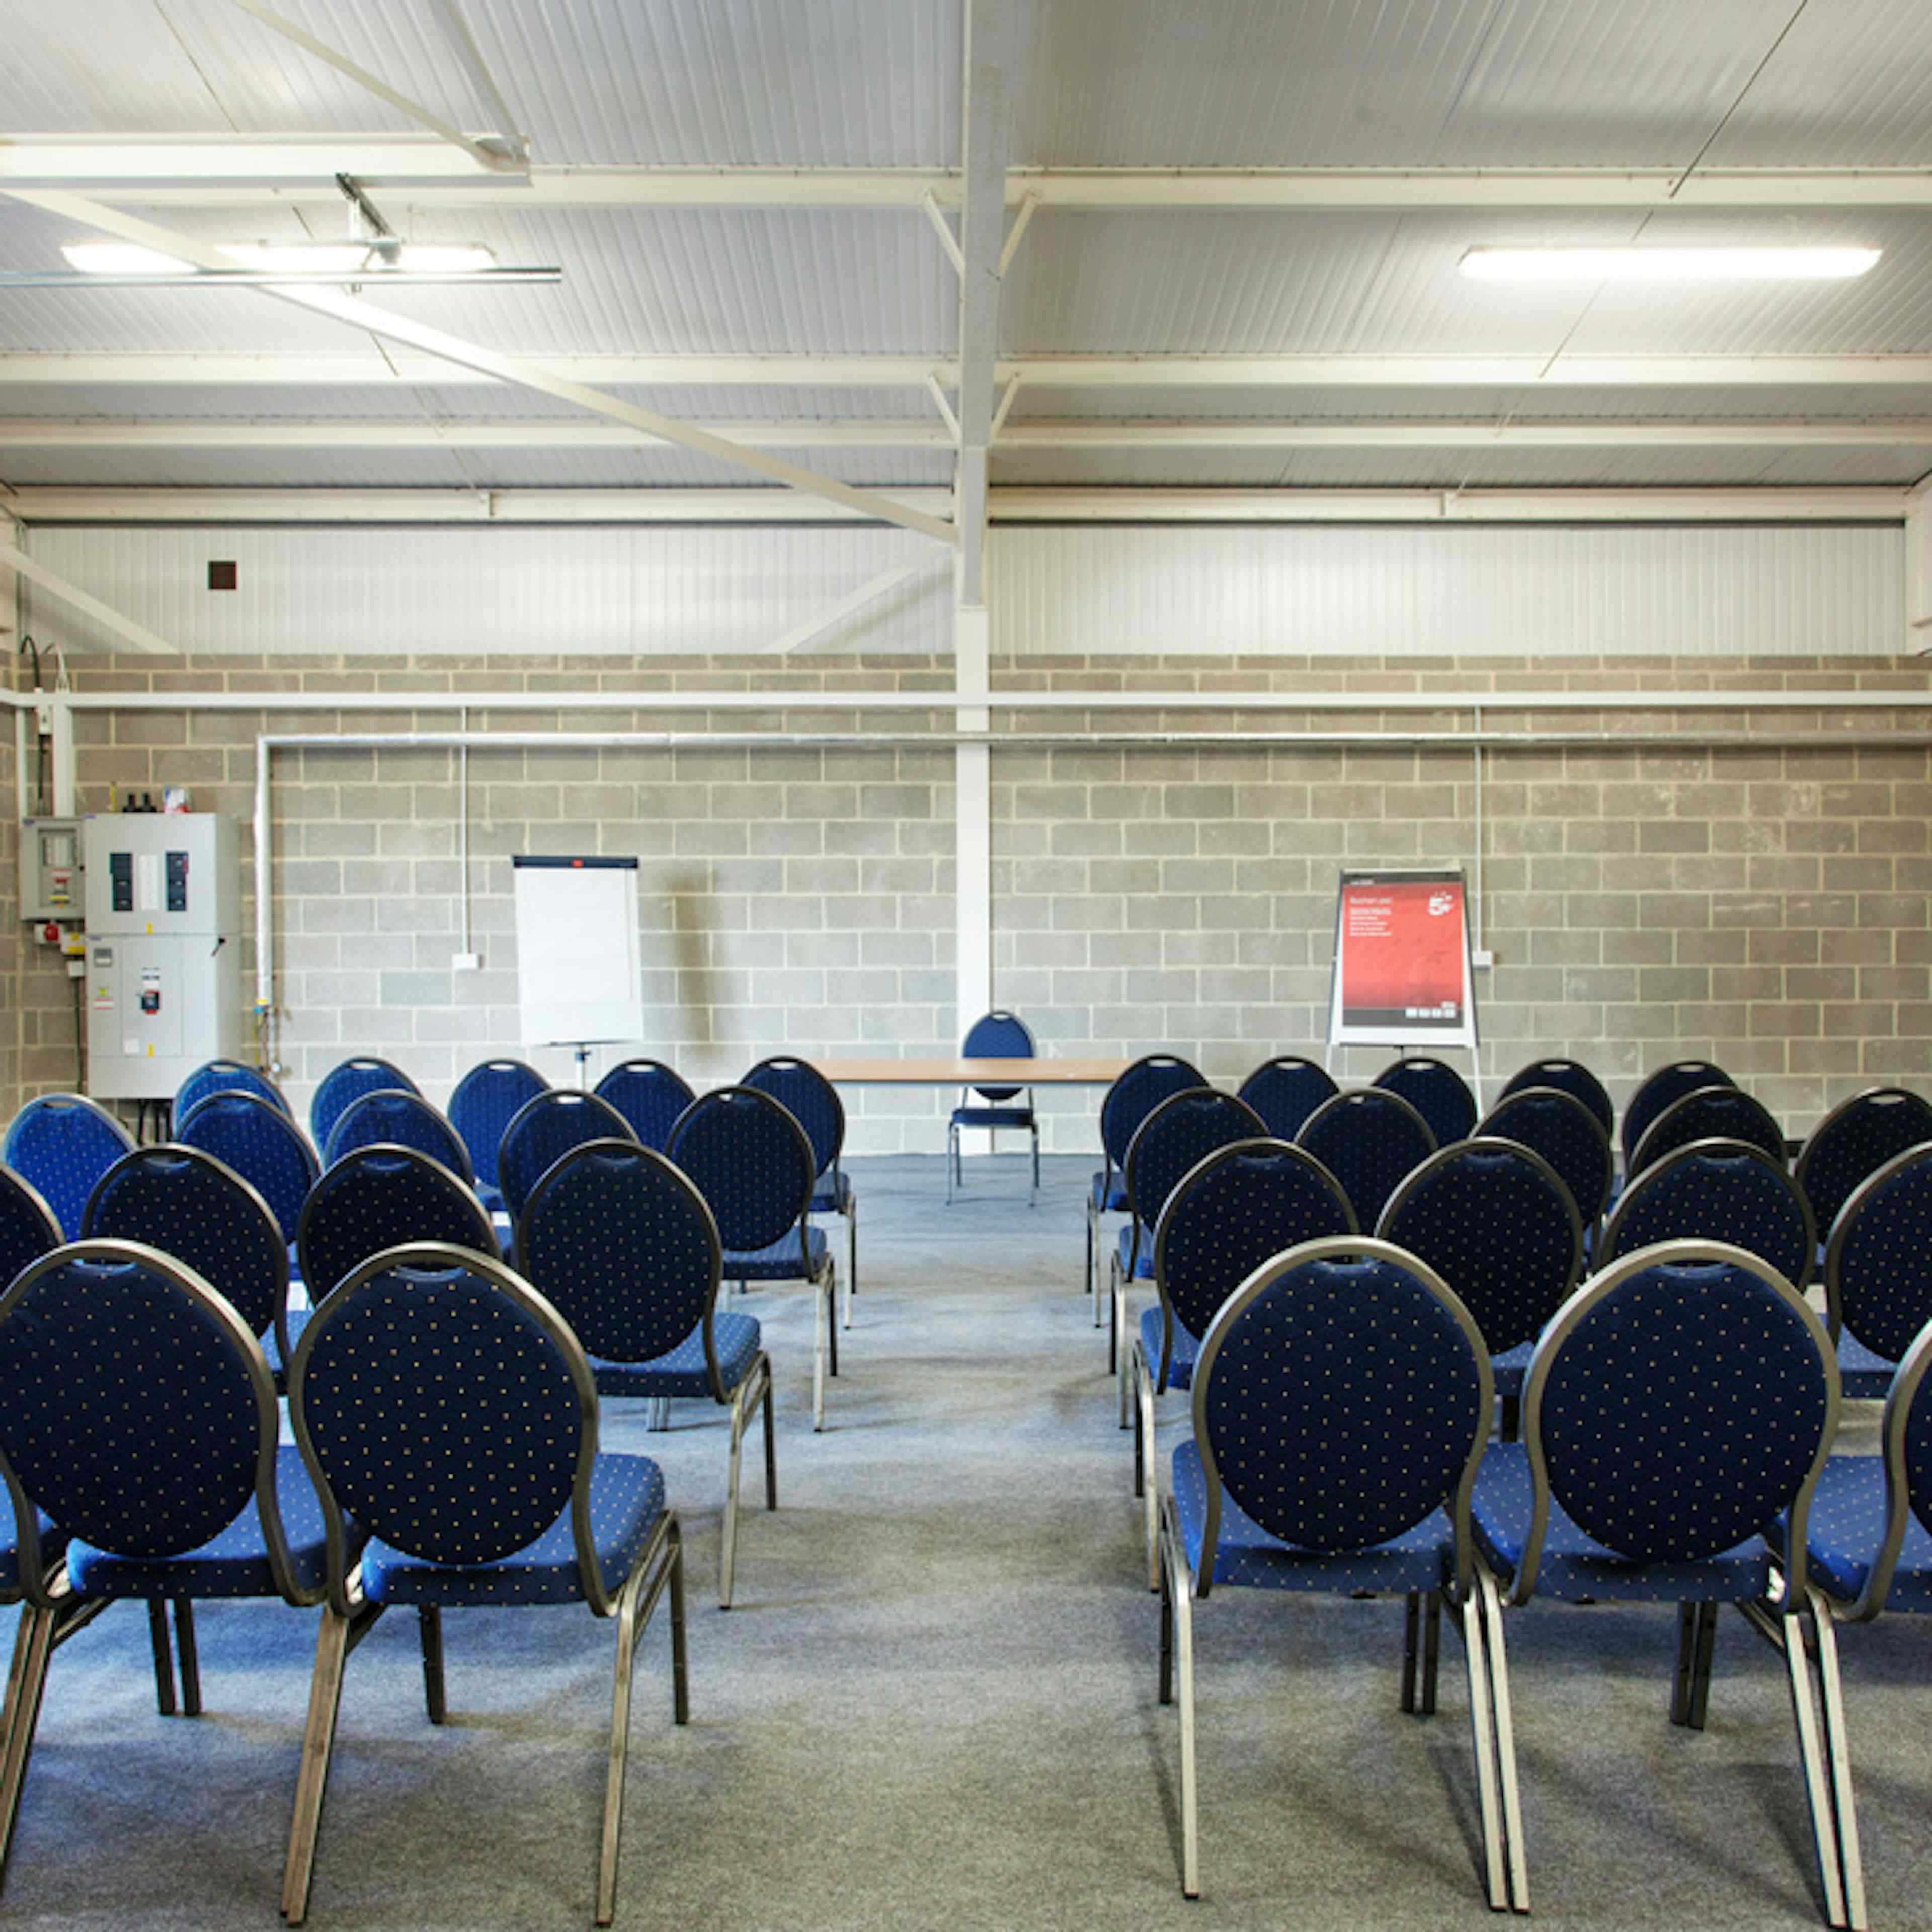 Kent Event Centre - Cornwallis Room image 1